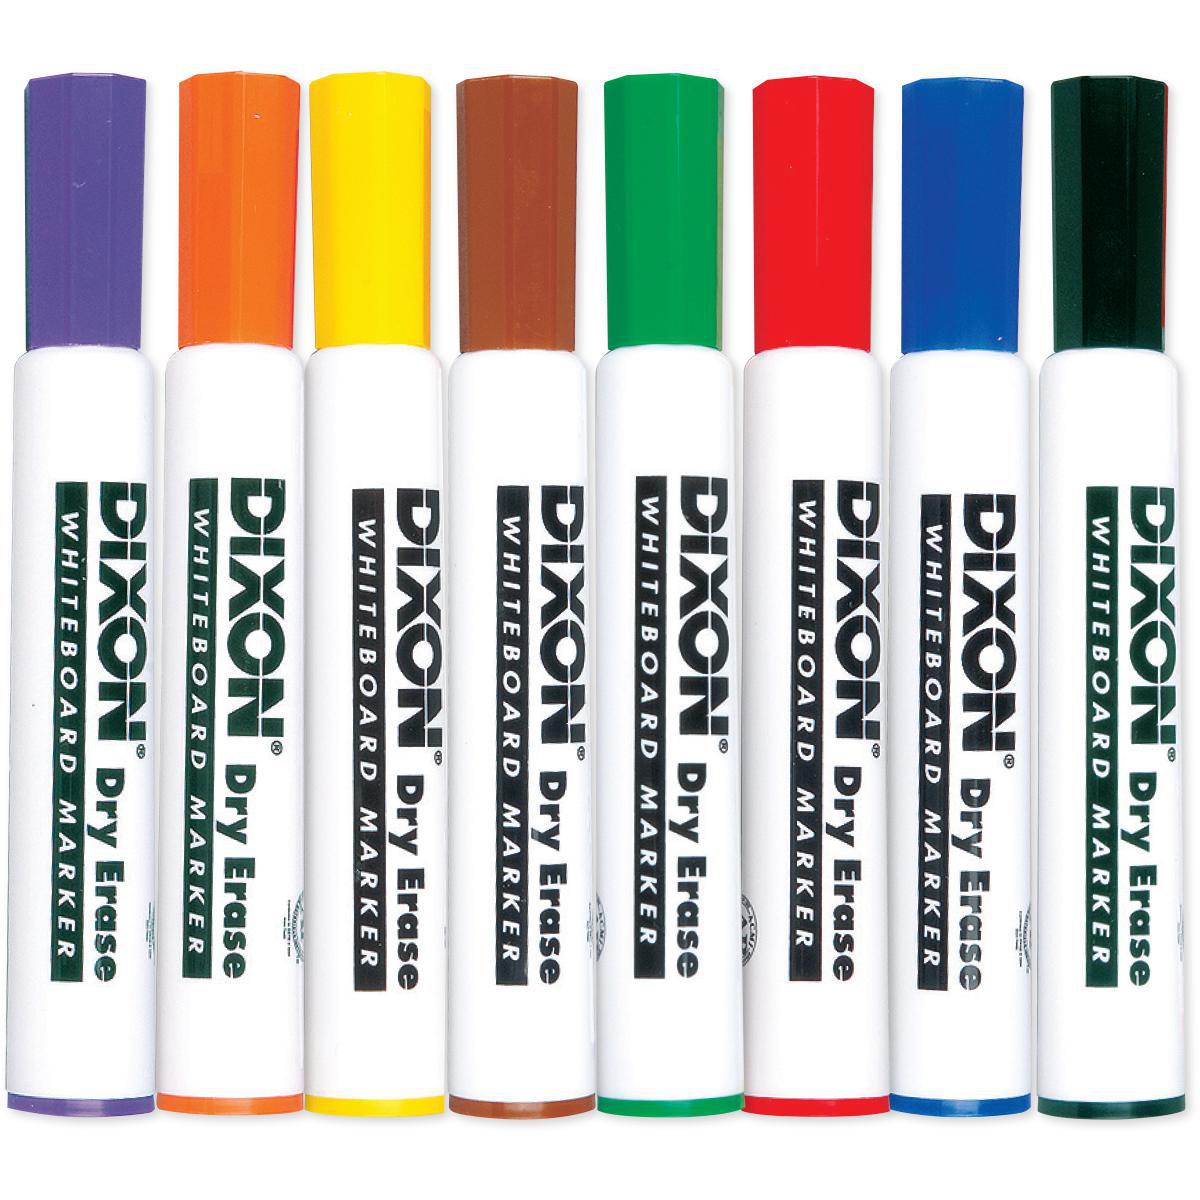  Dixon Dry-Erase Markers 